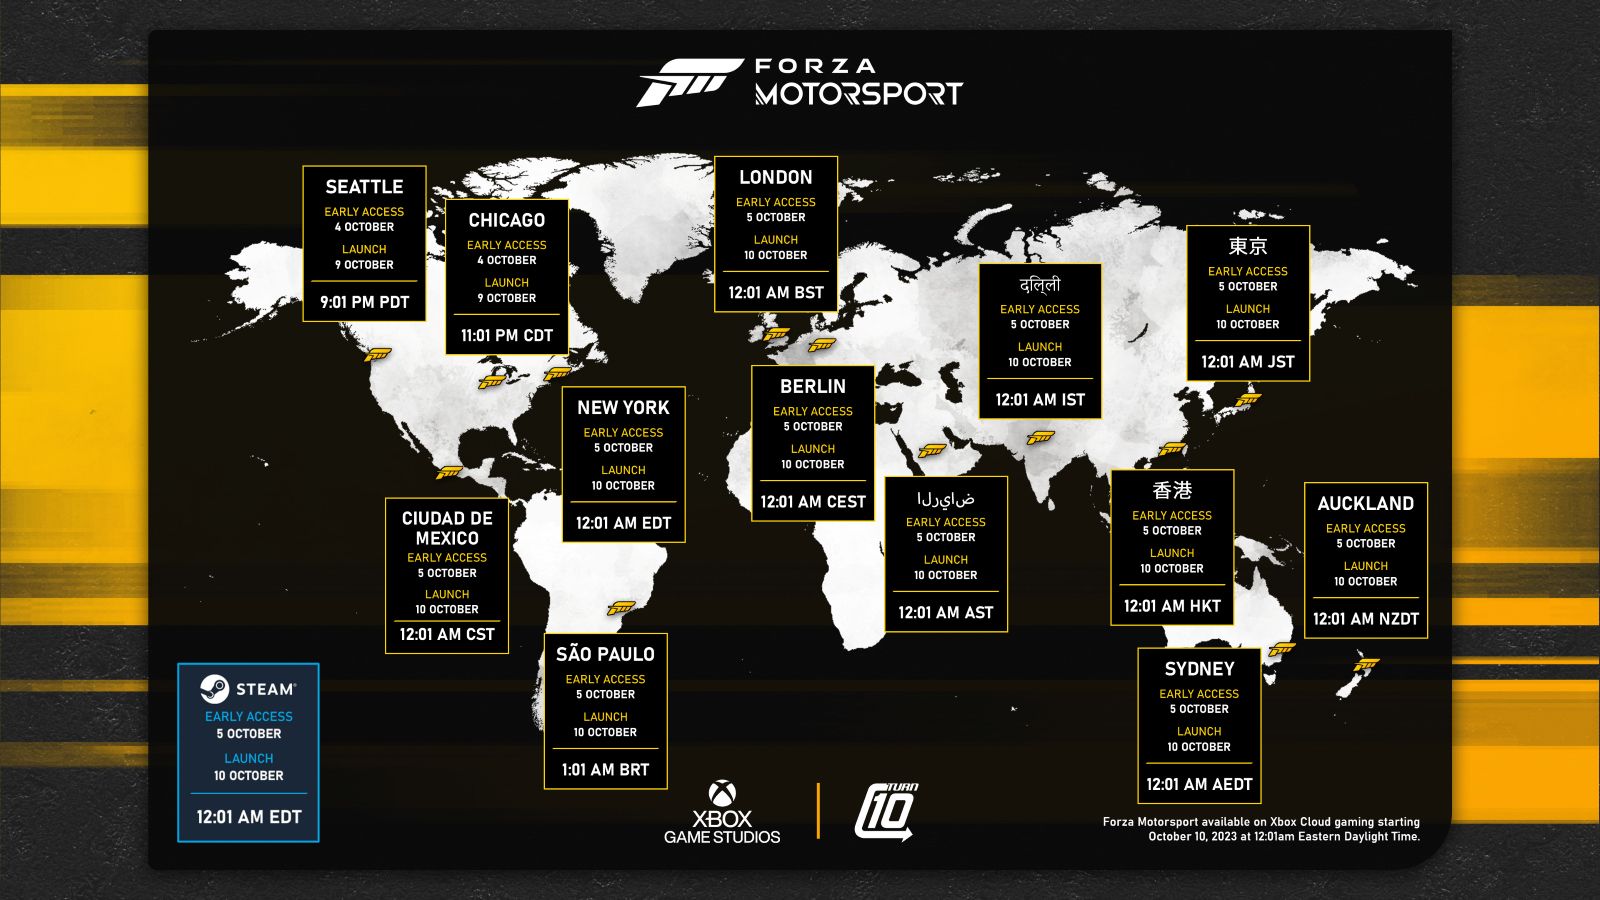 Forza Motorsport release times